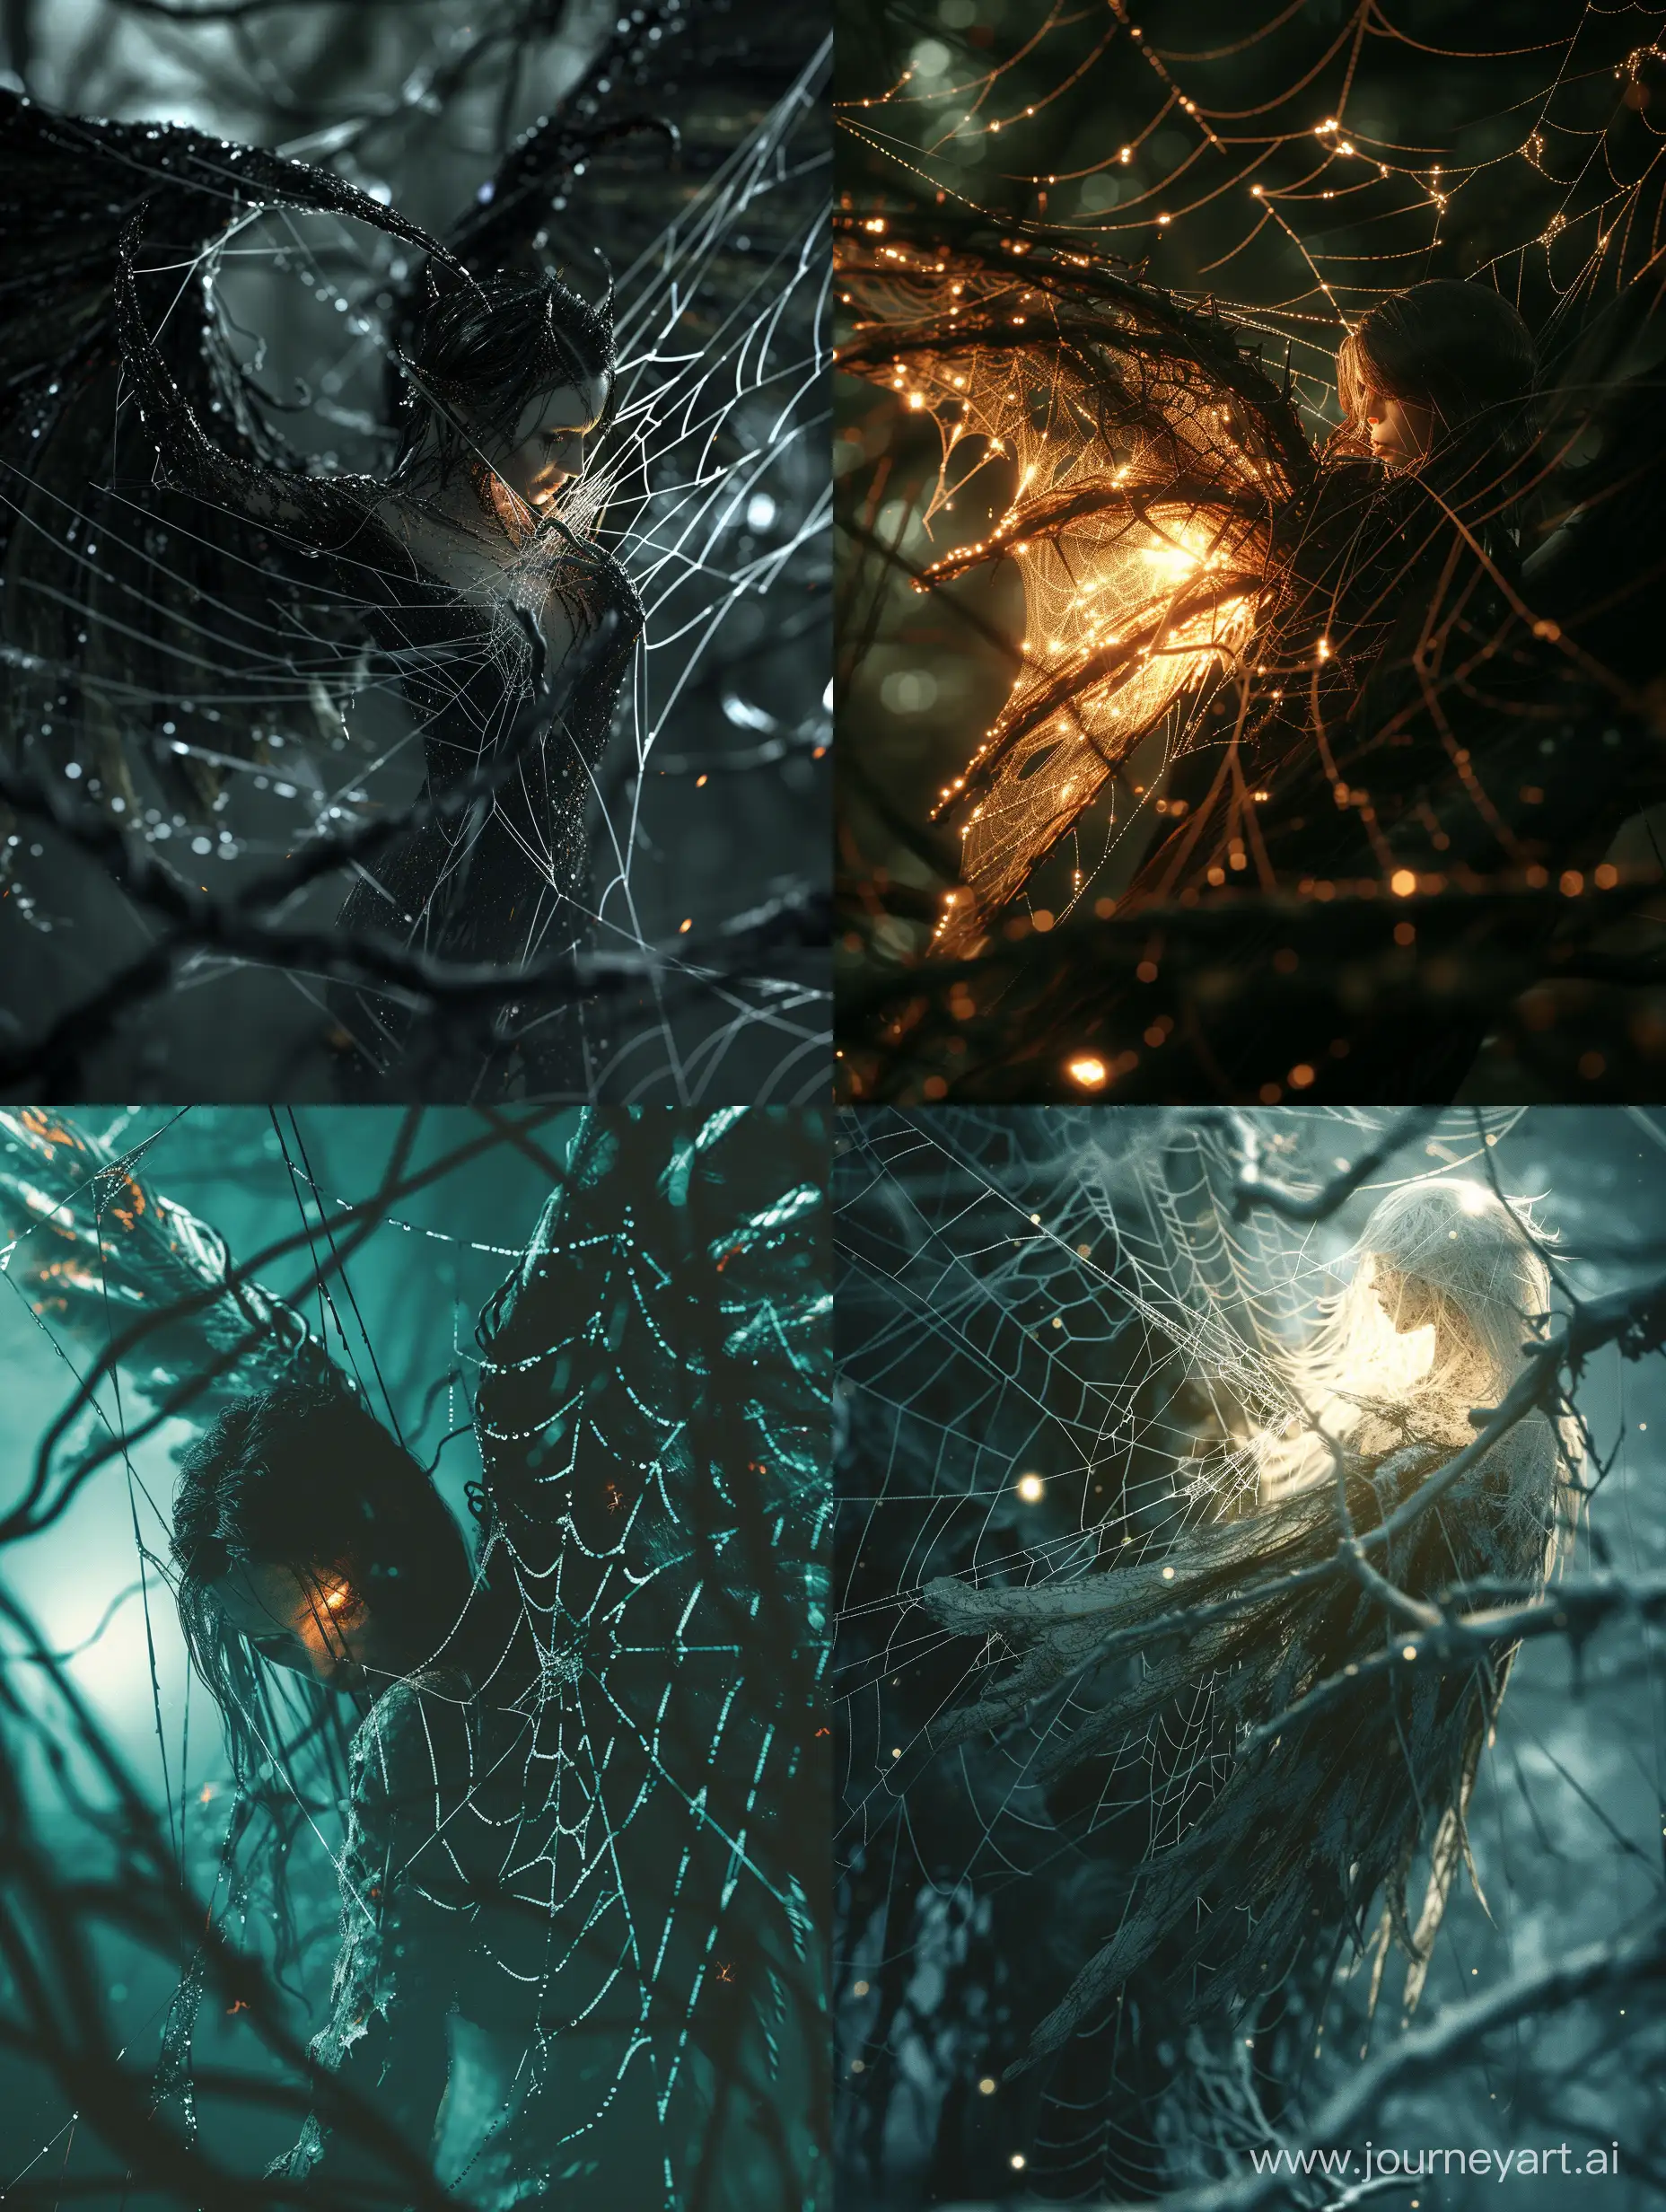 Intricate-Fantasy-Illustration-Demonic-Winged-Woman-Caught-in-Spiderweb